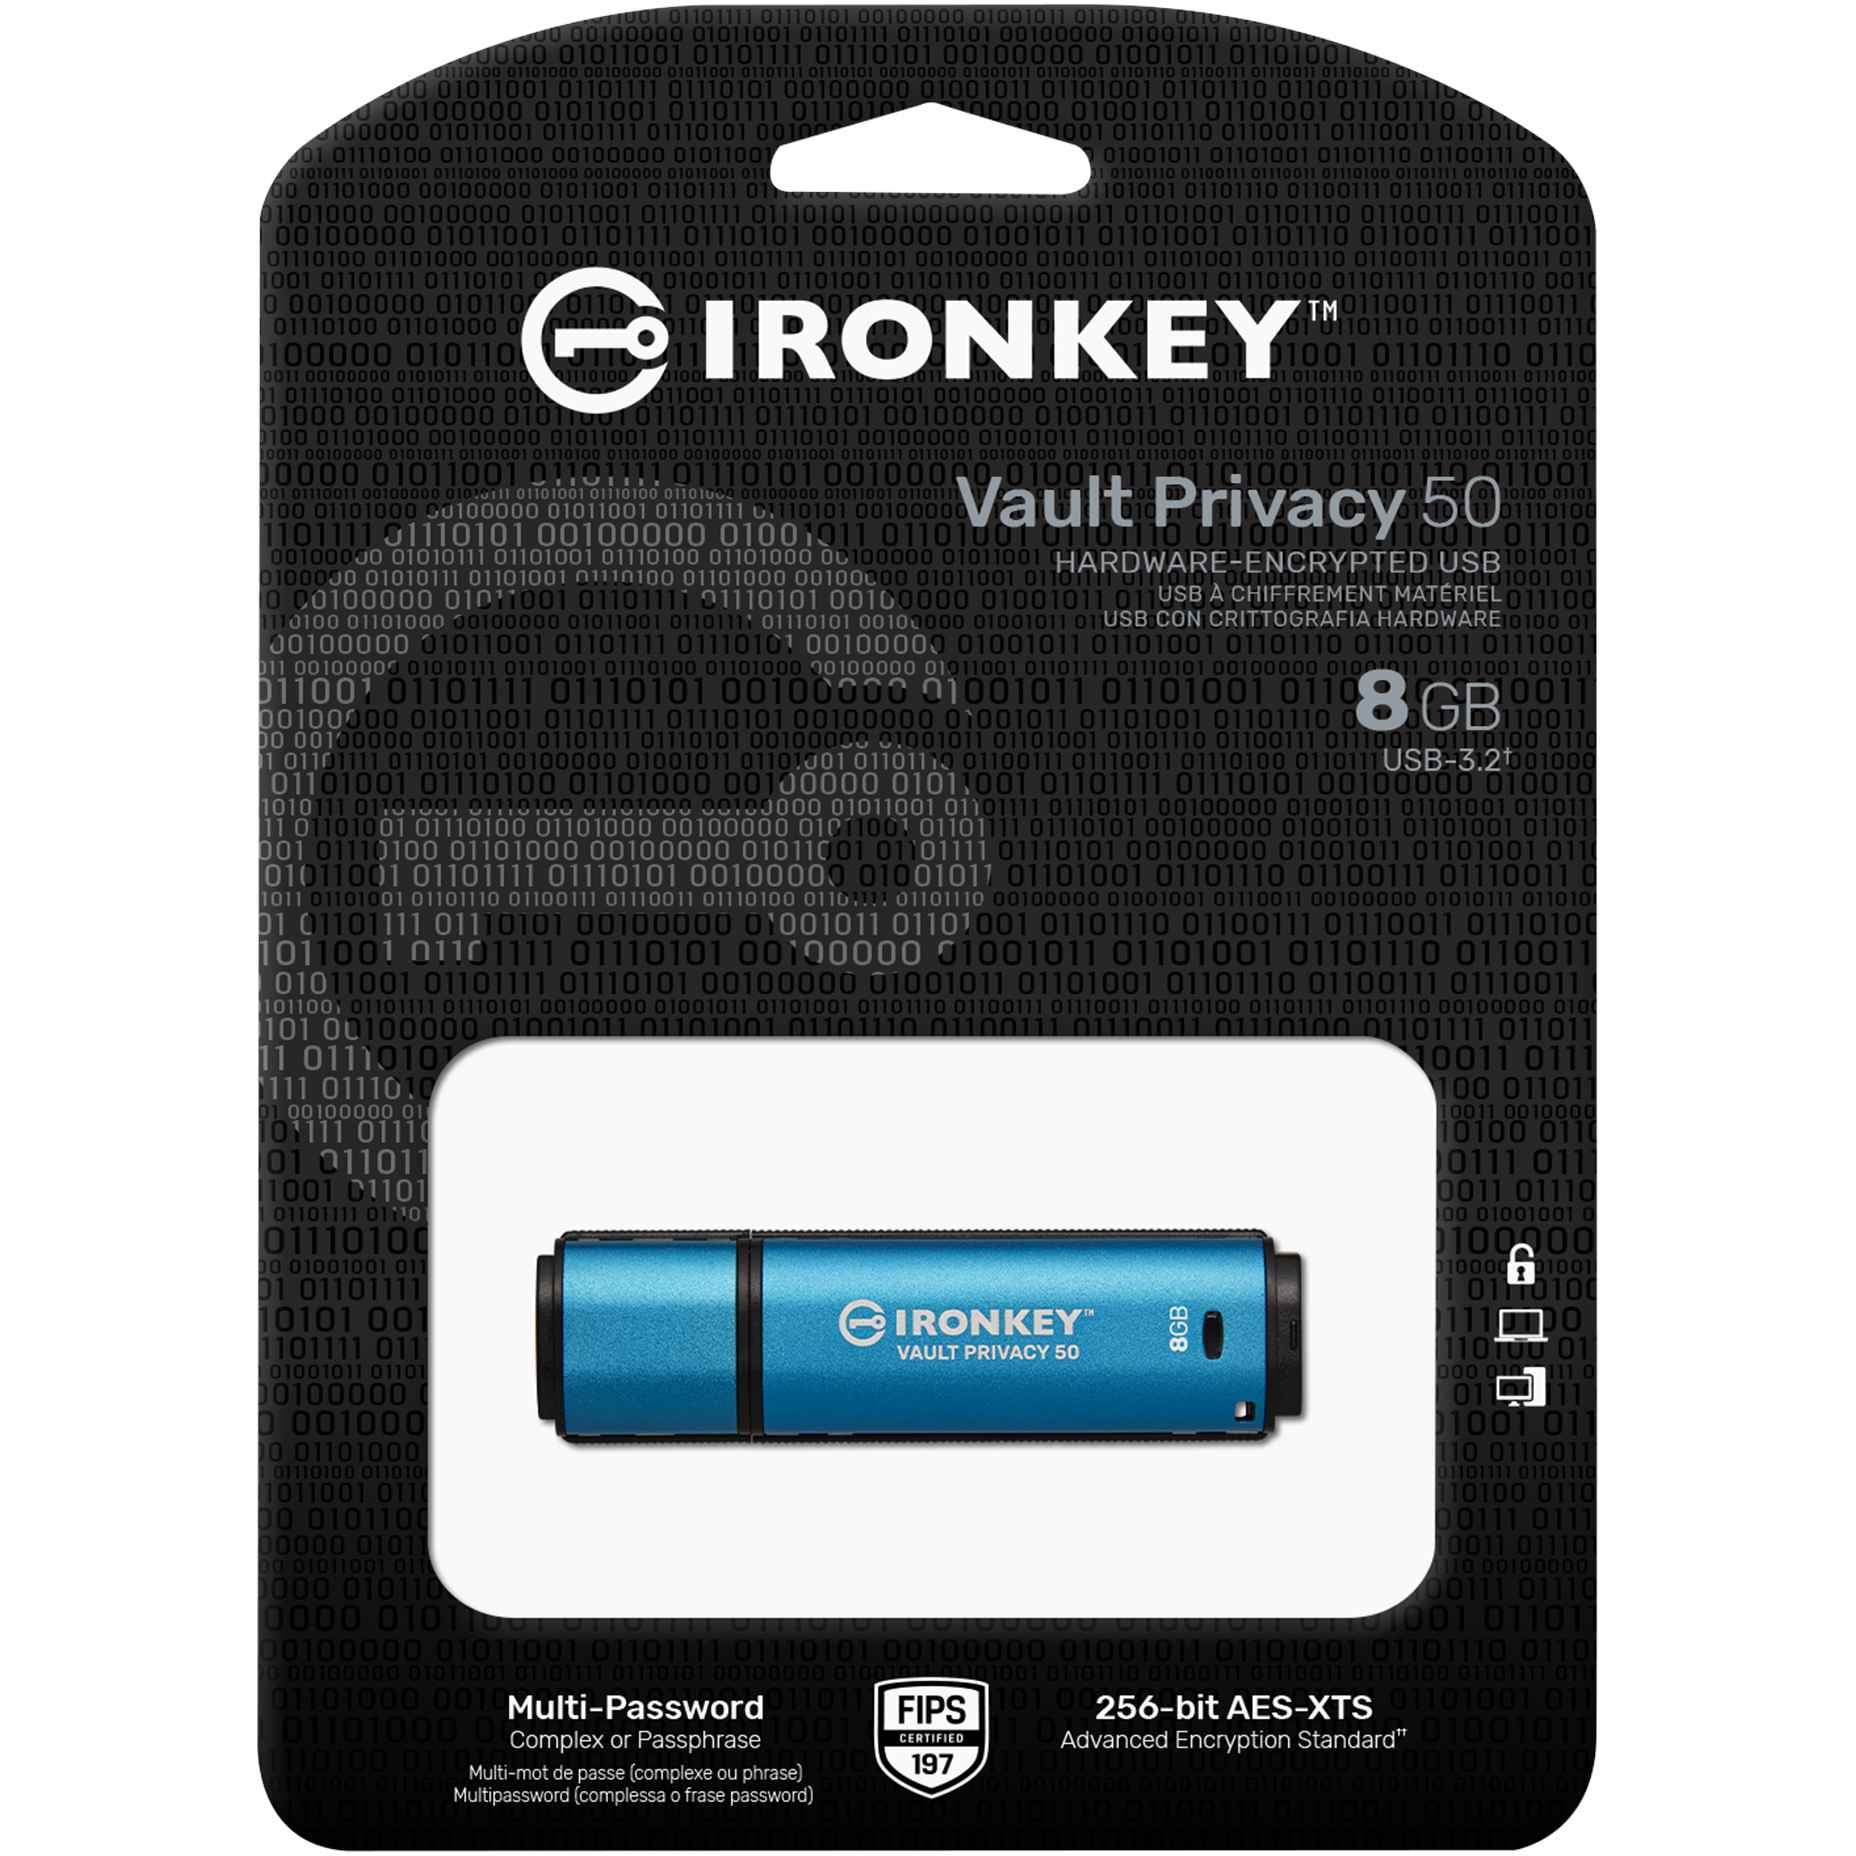 Original Kingston Ironkey Vp50 Usb 8Gb (IKVP50/8GB)